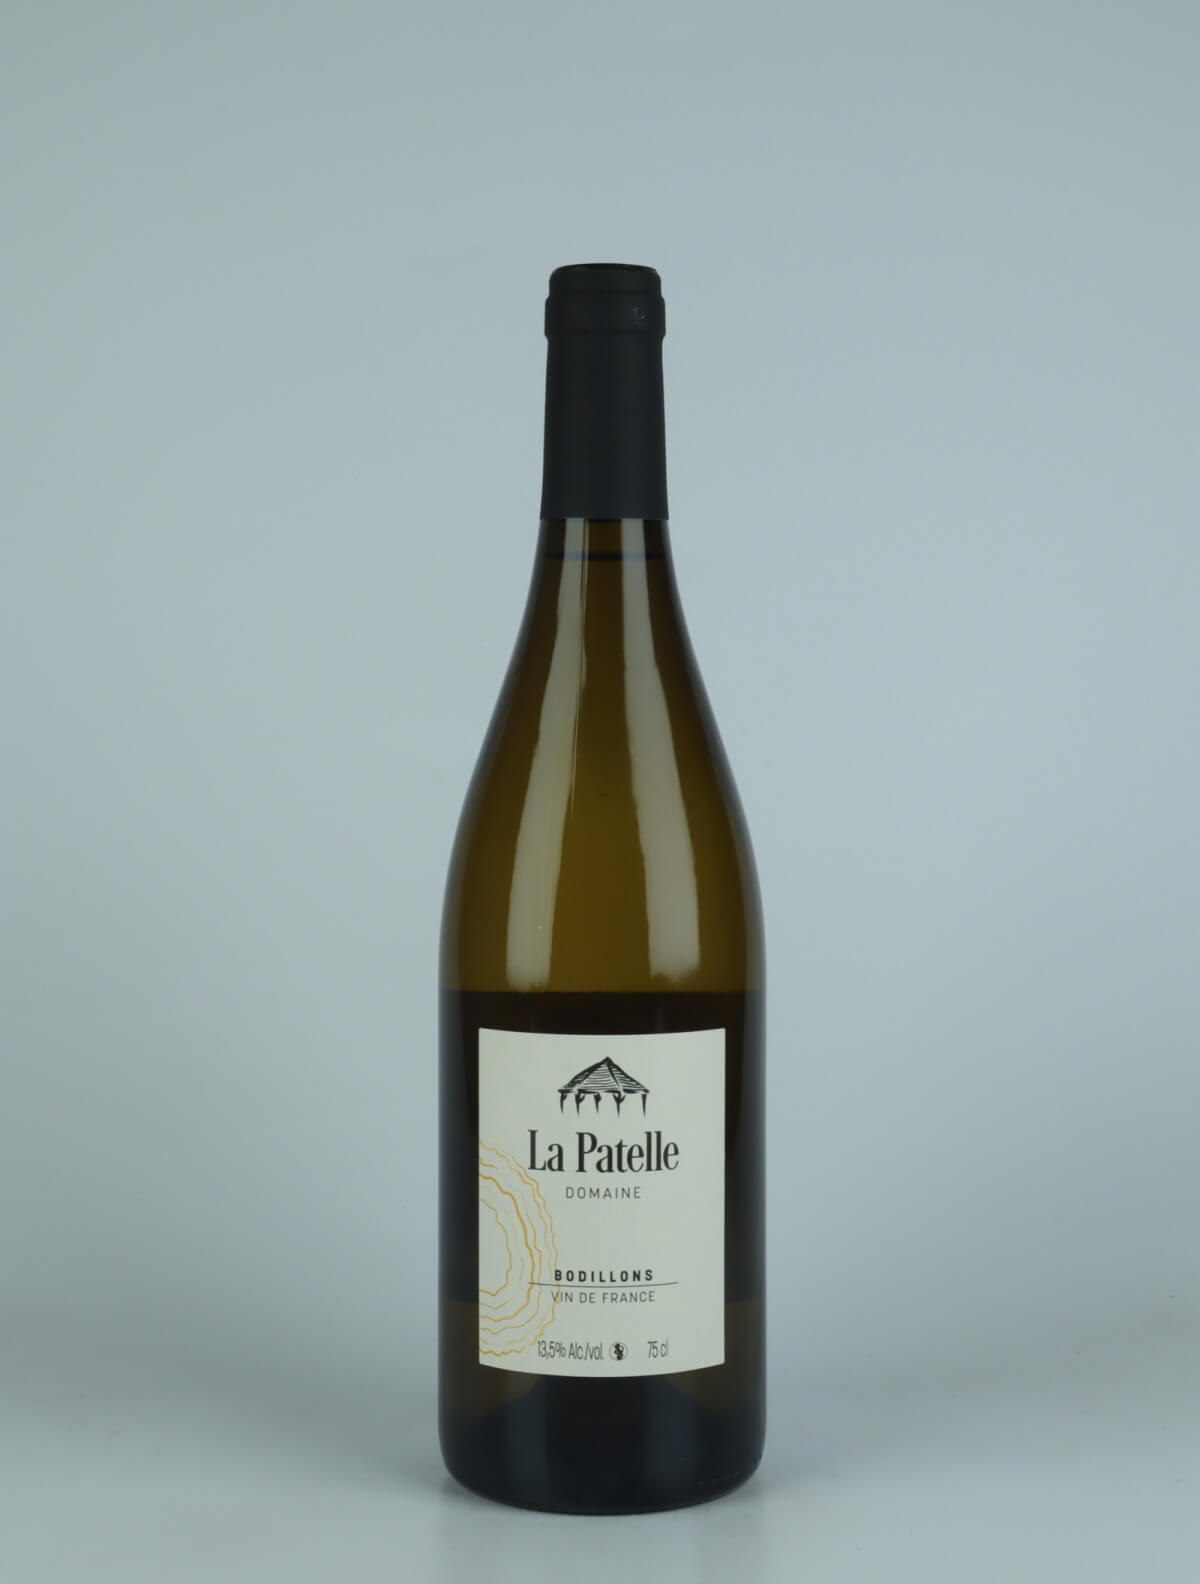 A bottle 2022 Bodillons - Savagnin White wine from Domaine de La Patelle, Jura in France